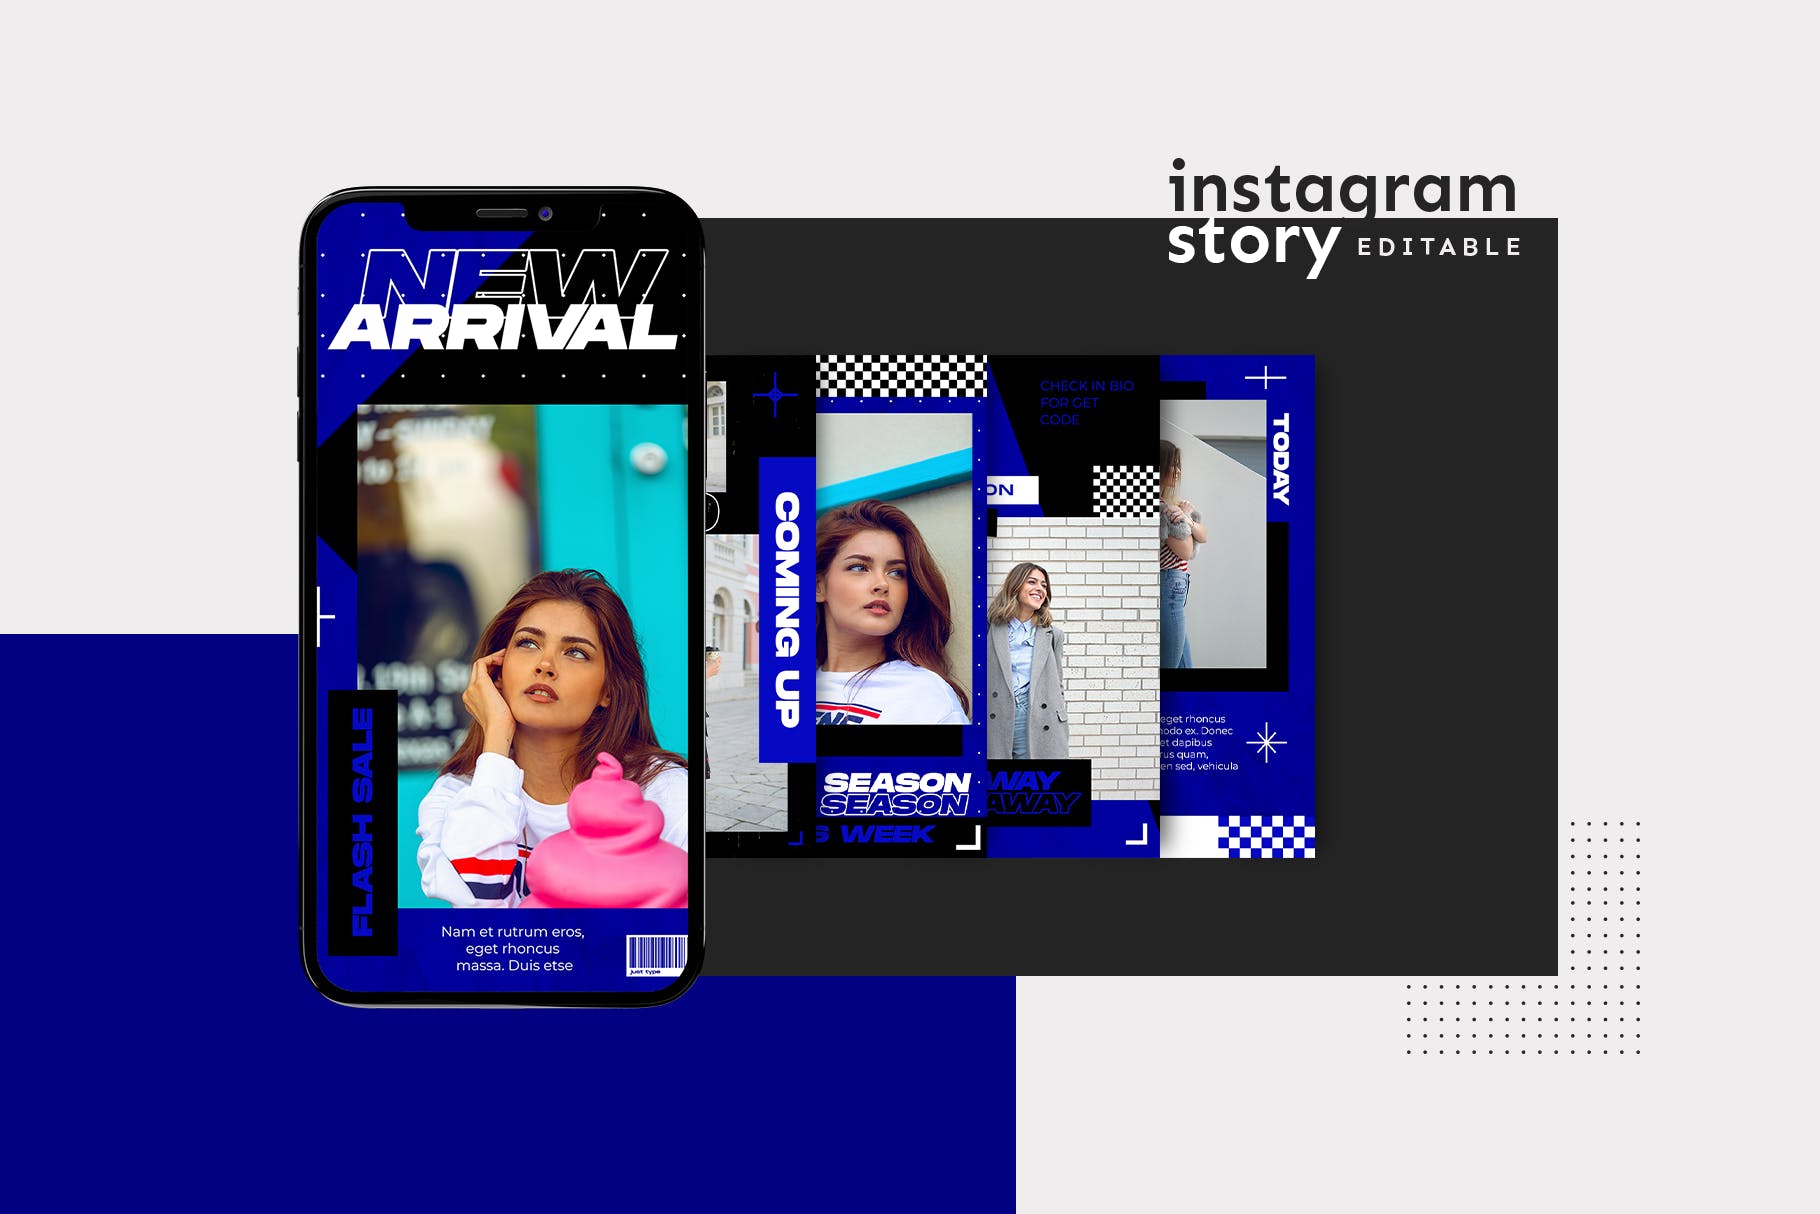 Instagram社交平台新品发布推广设计模板第一素材精选 Instagram Story Template插图(1)